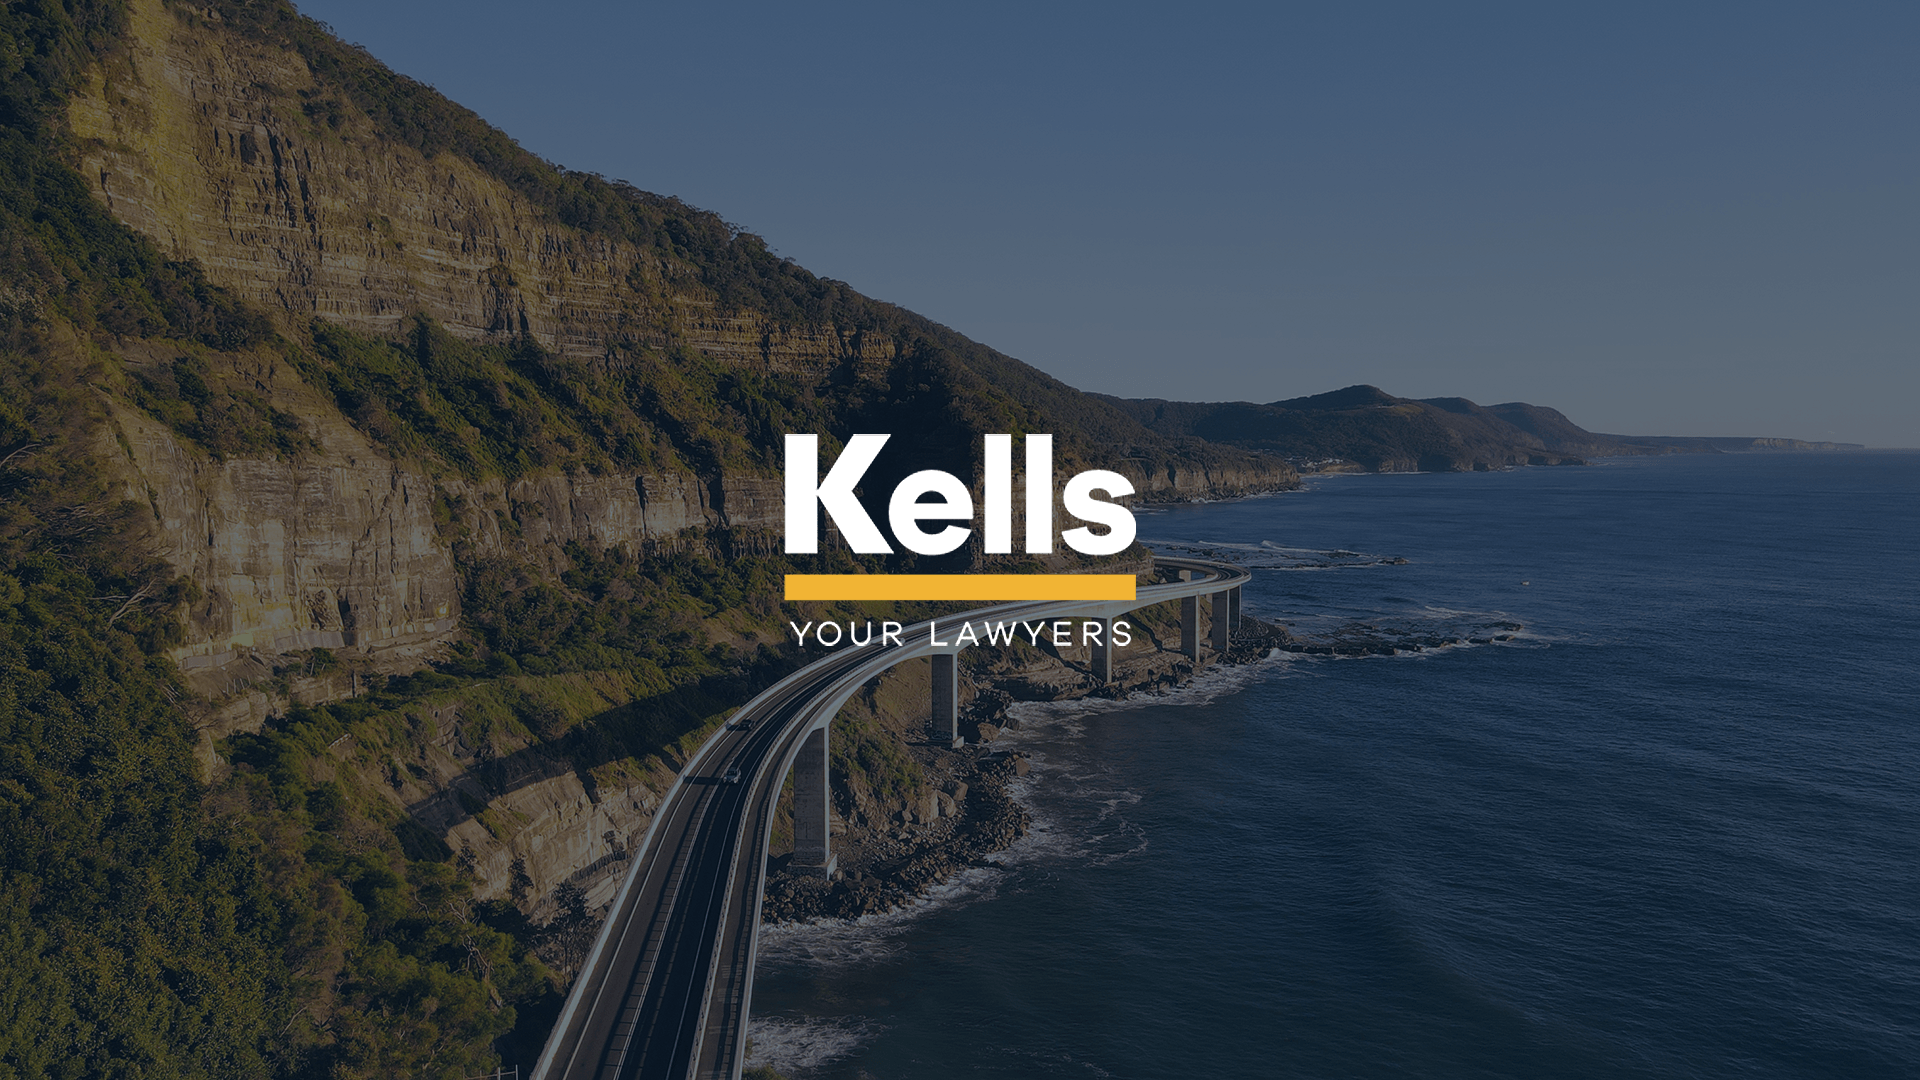 Beautiful Sea Cliff Bridge vista featuring the Kells the Lawyers emblem